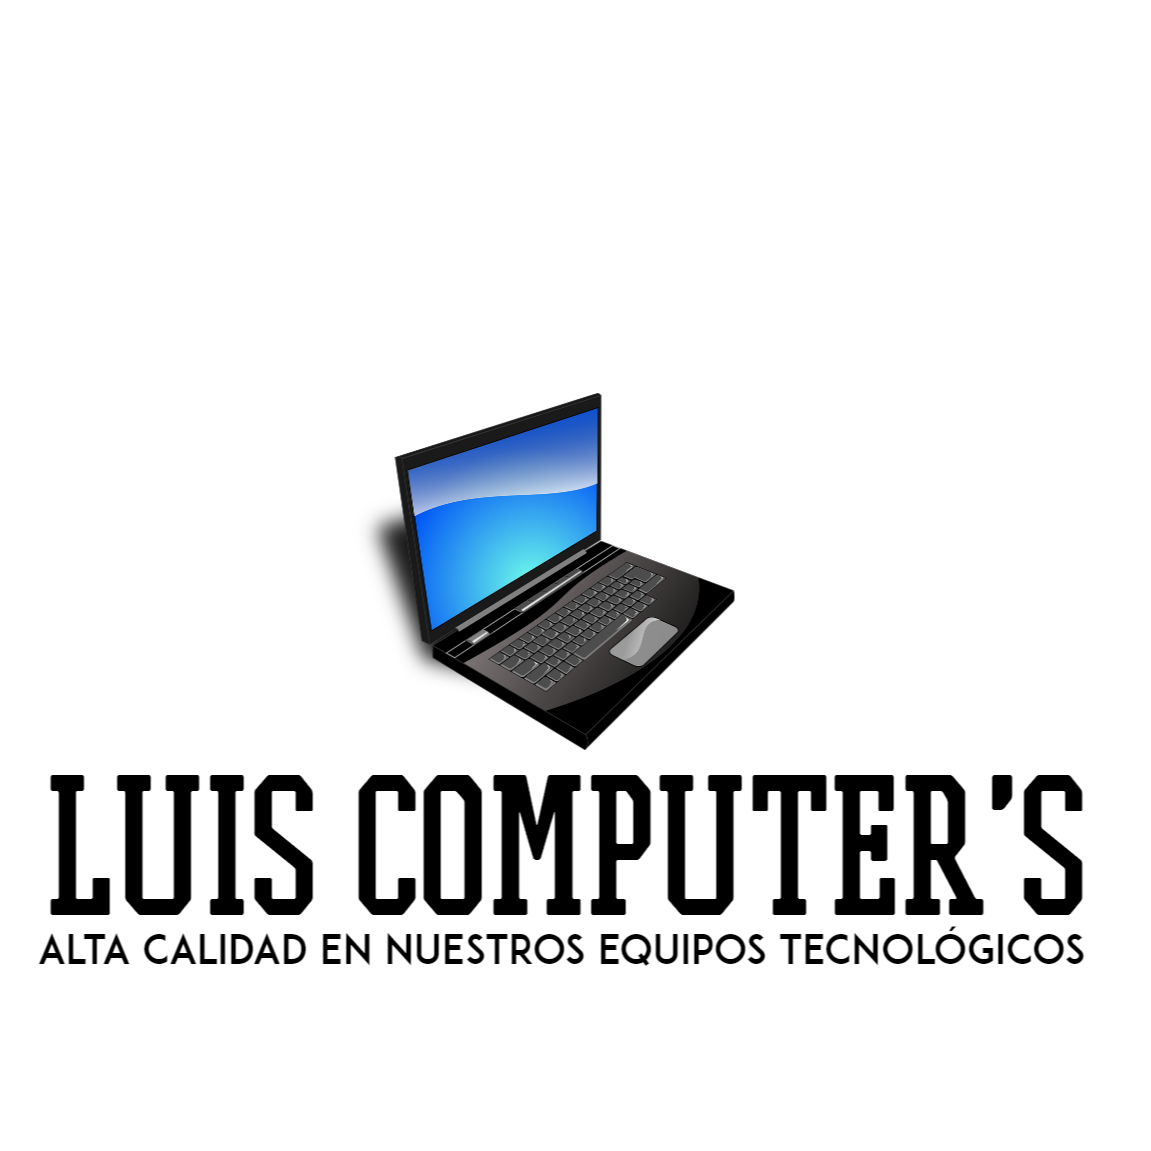 Luis Computer